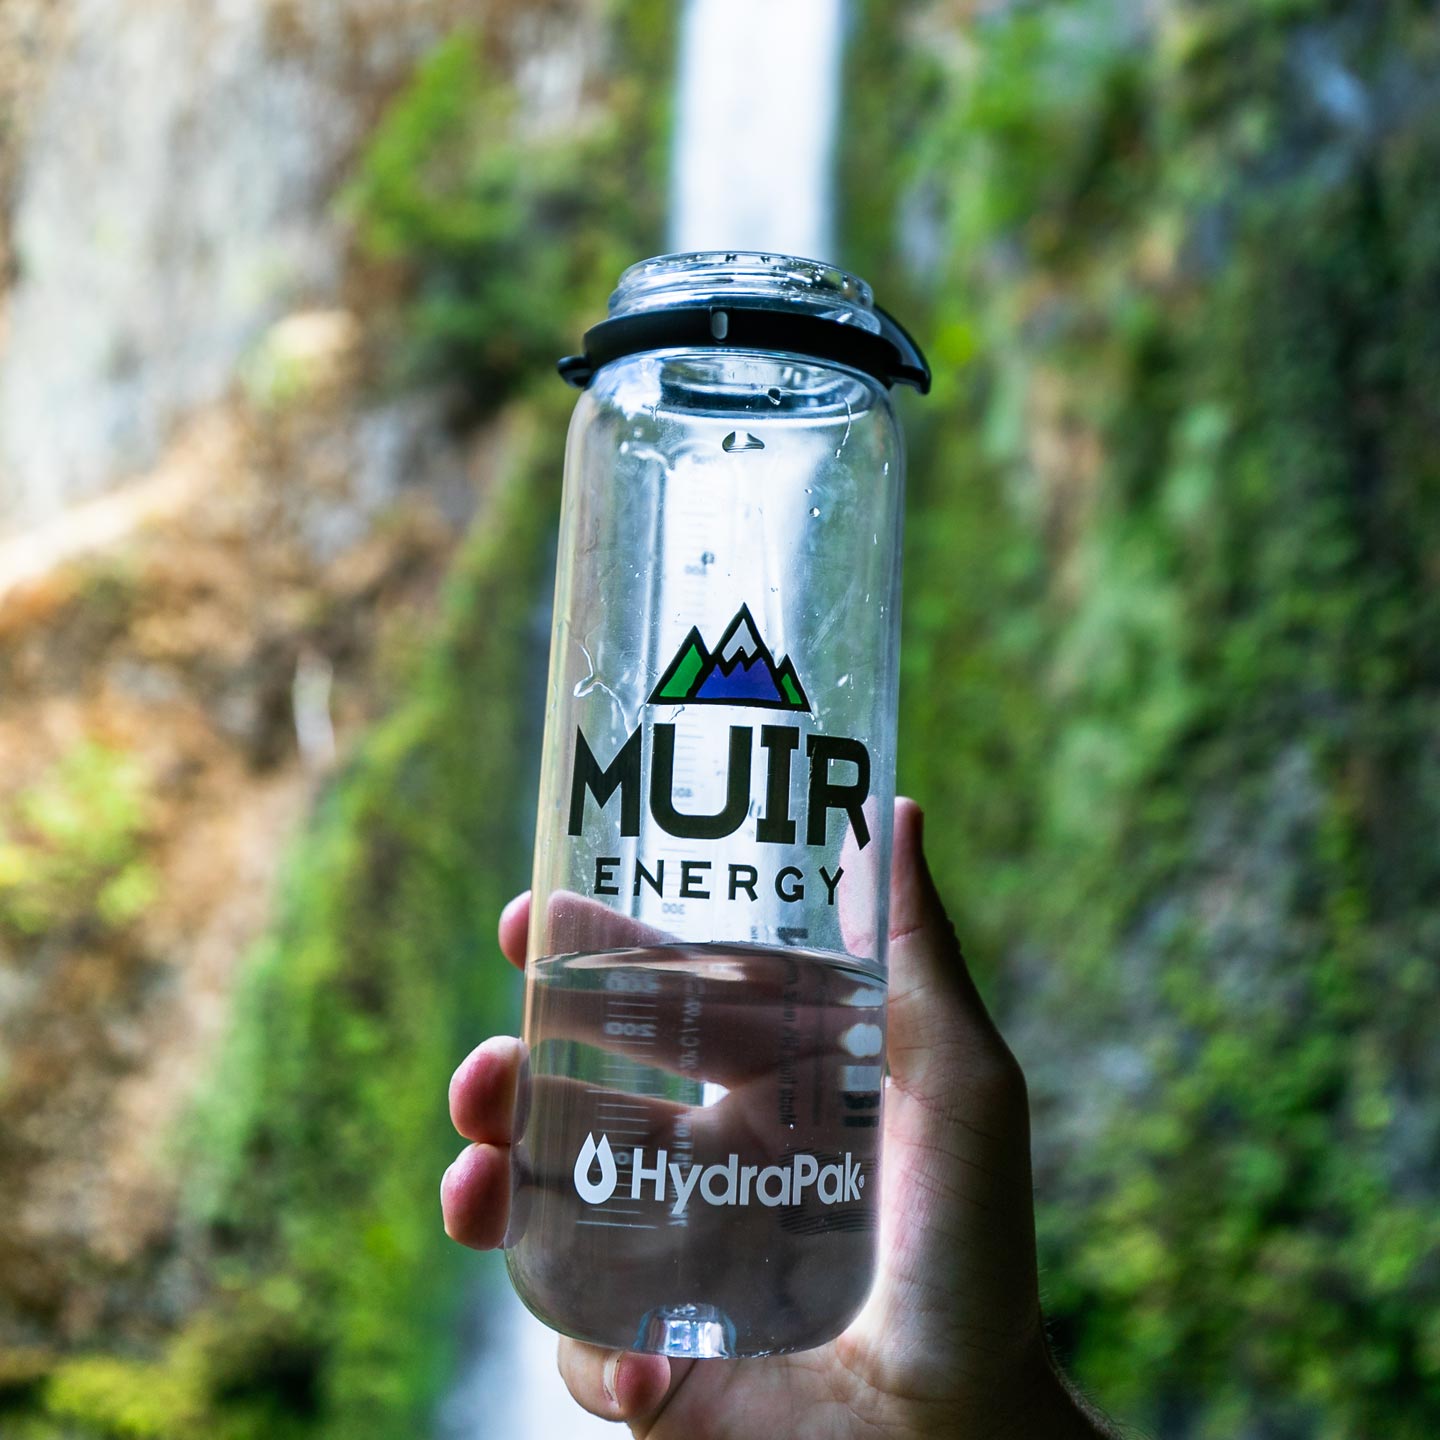 MUIR Energy x HydraPak 25oz/750ml Water Bottle